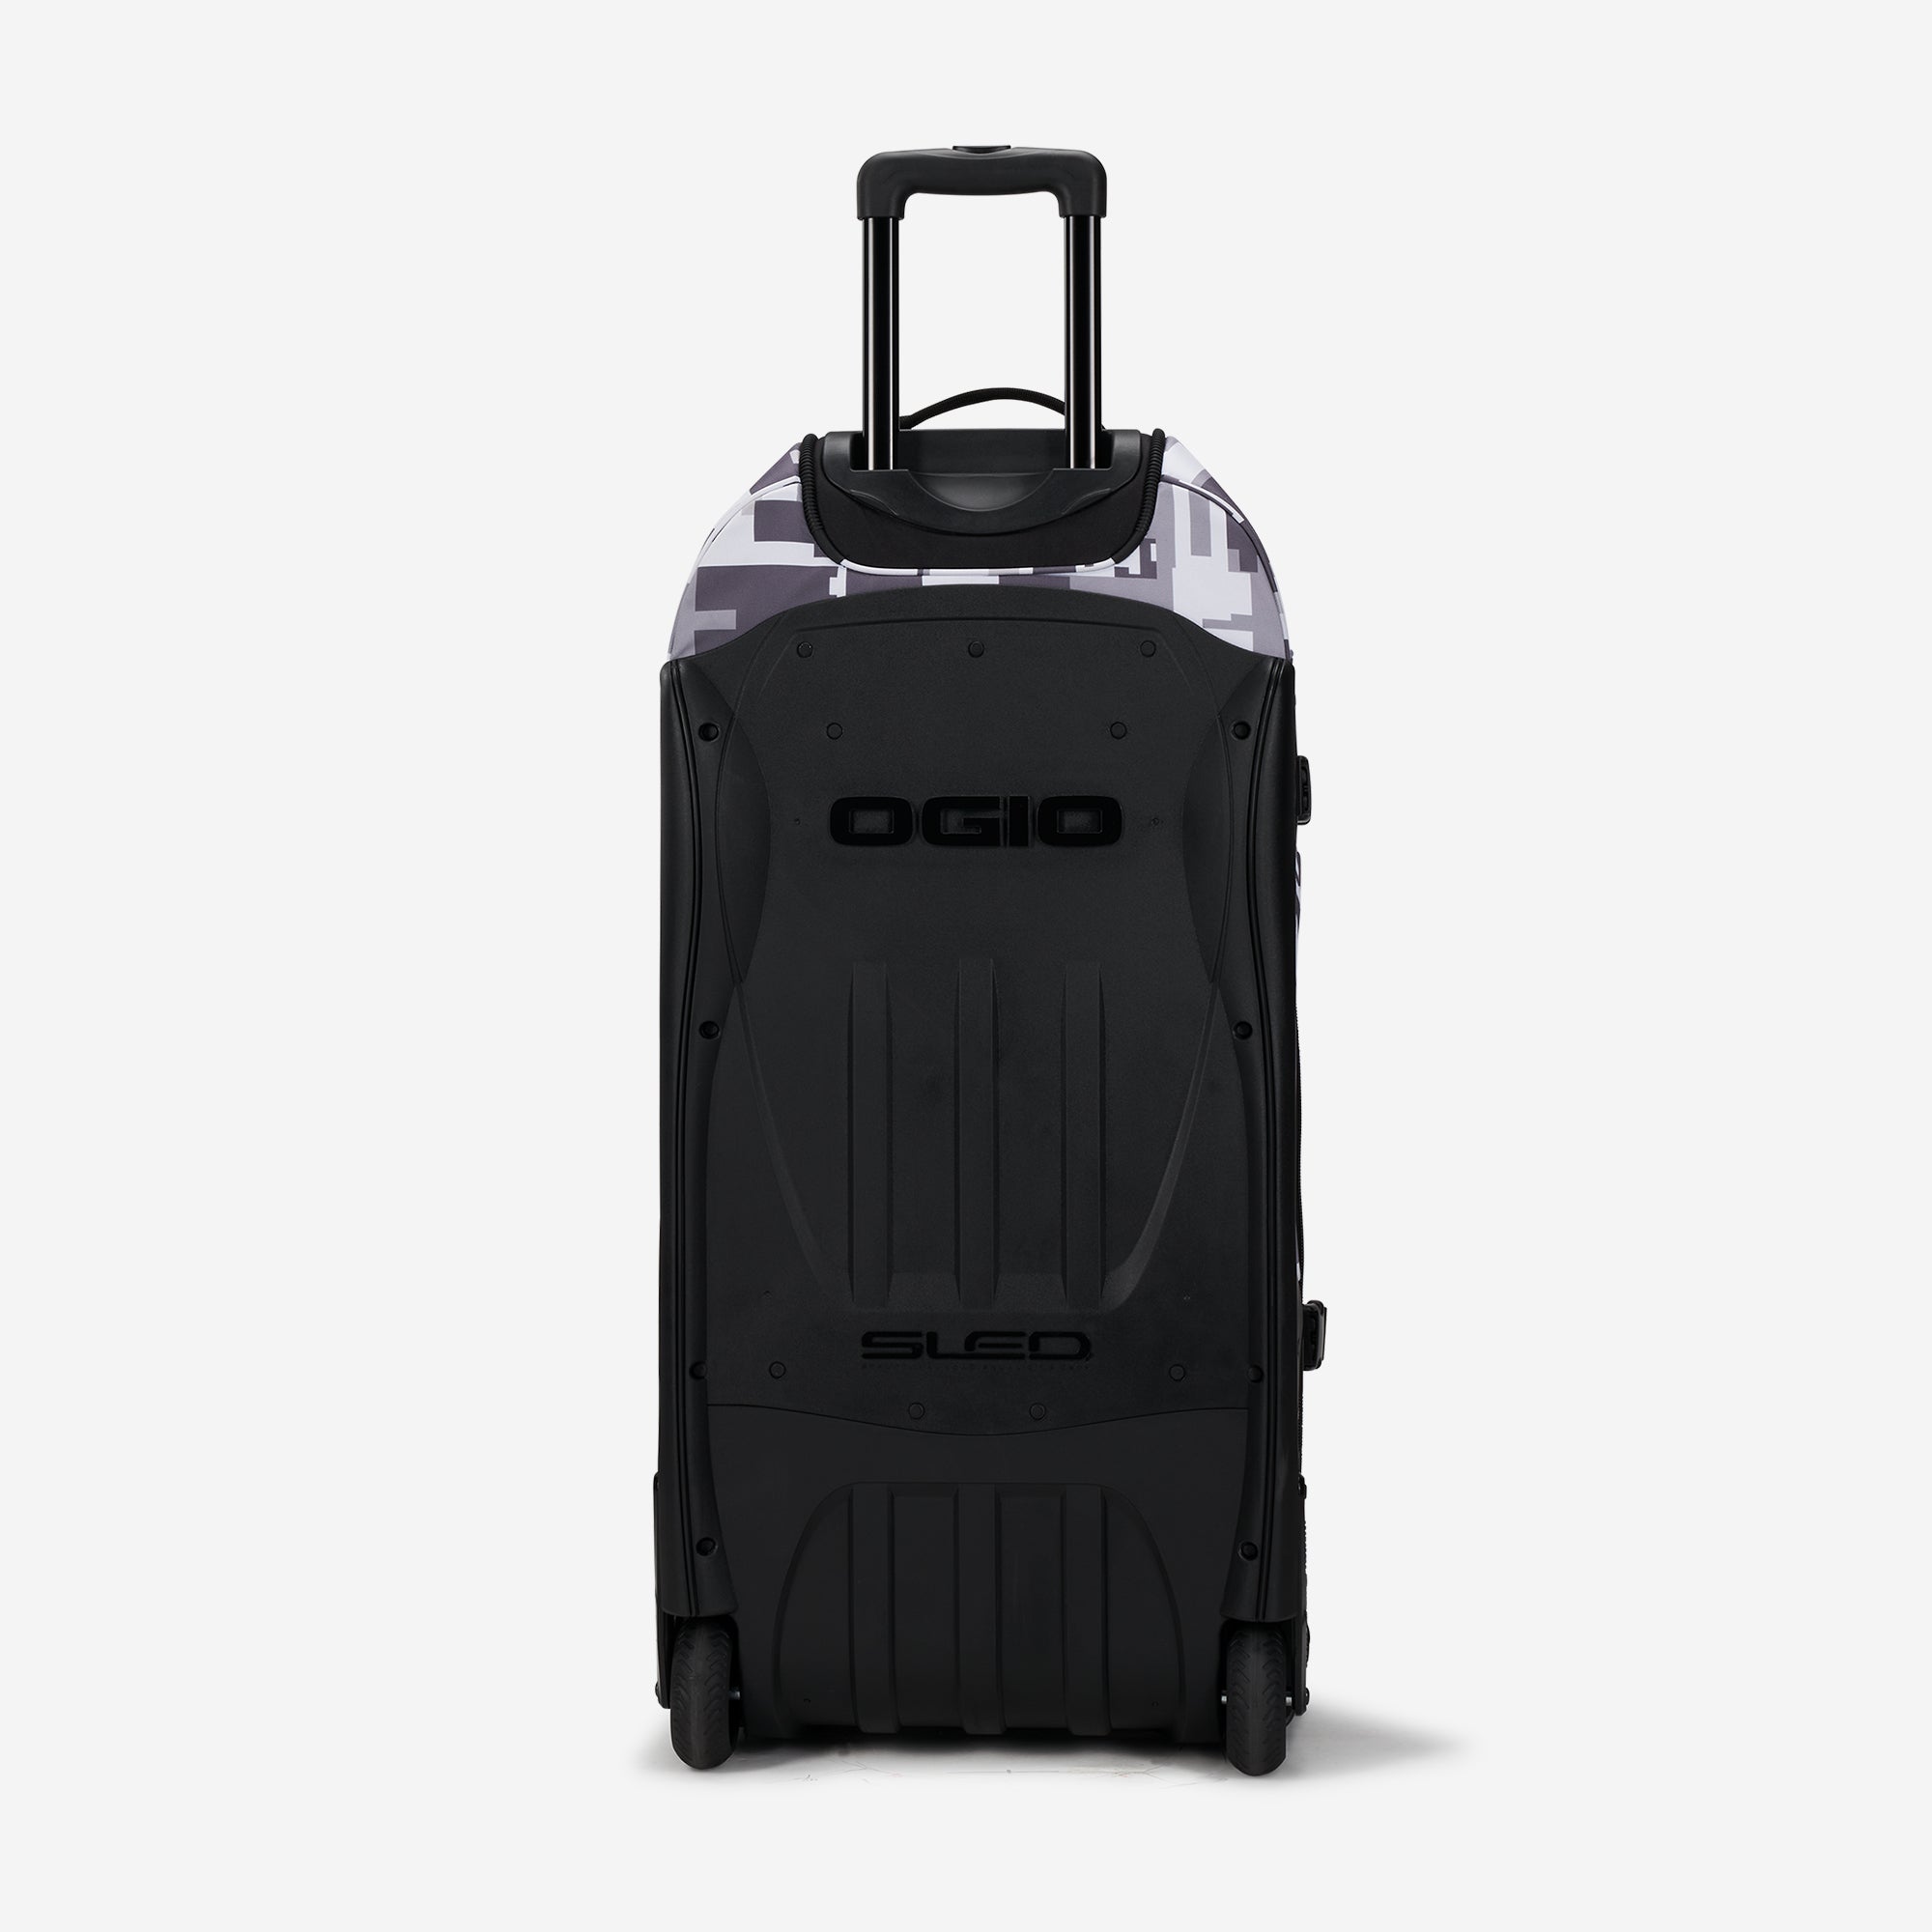 Rig 9800 Travel Bag